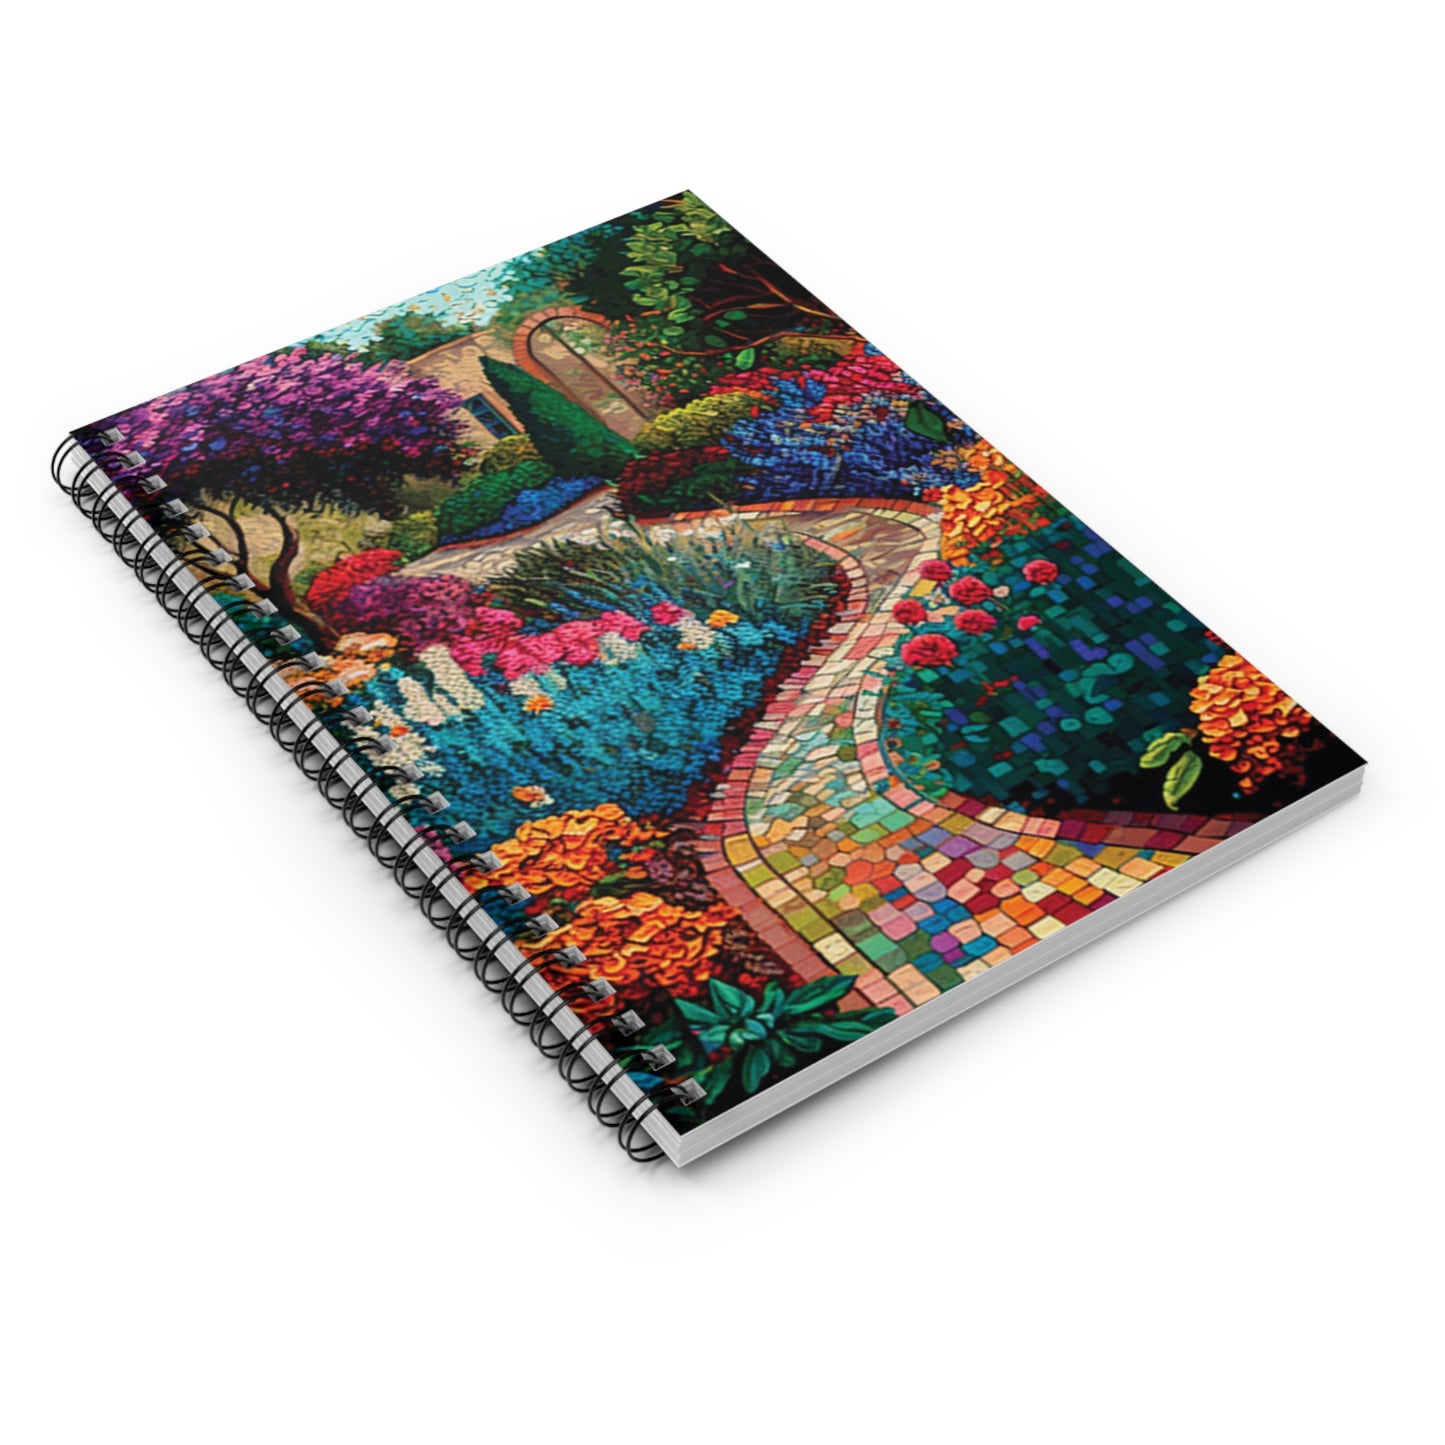 Spiral notebook - Mosaic Garden Inspired